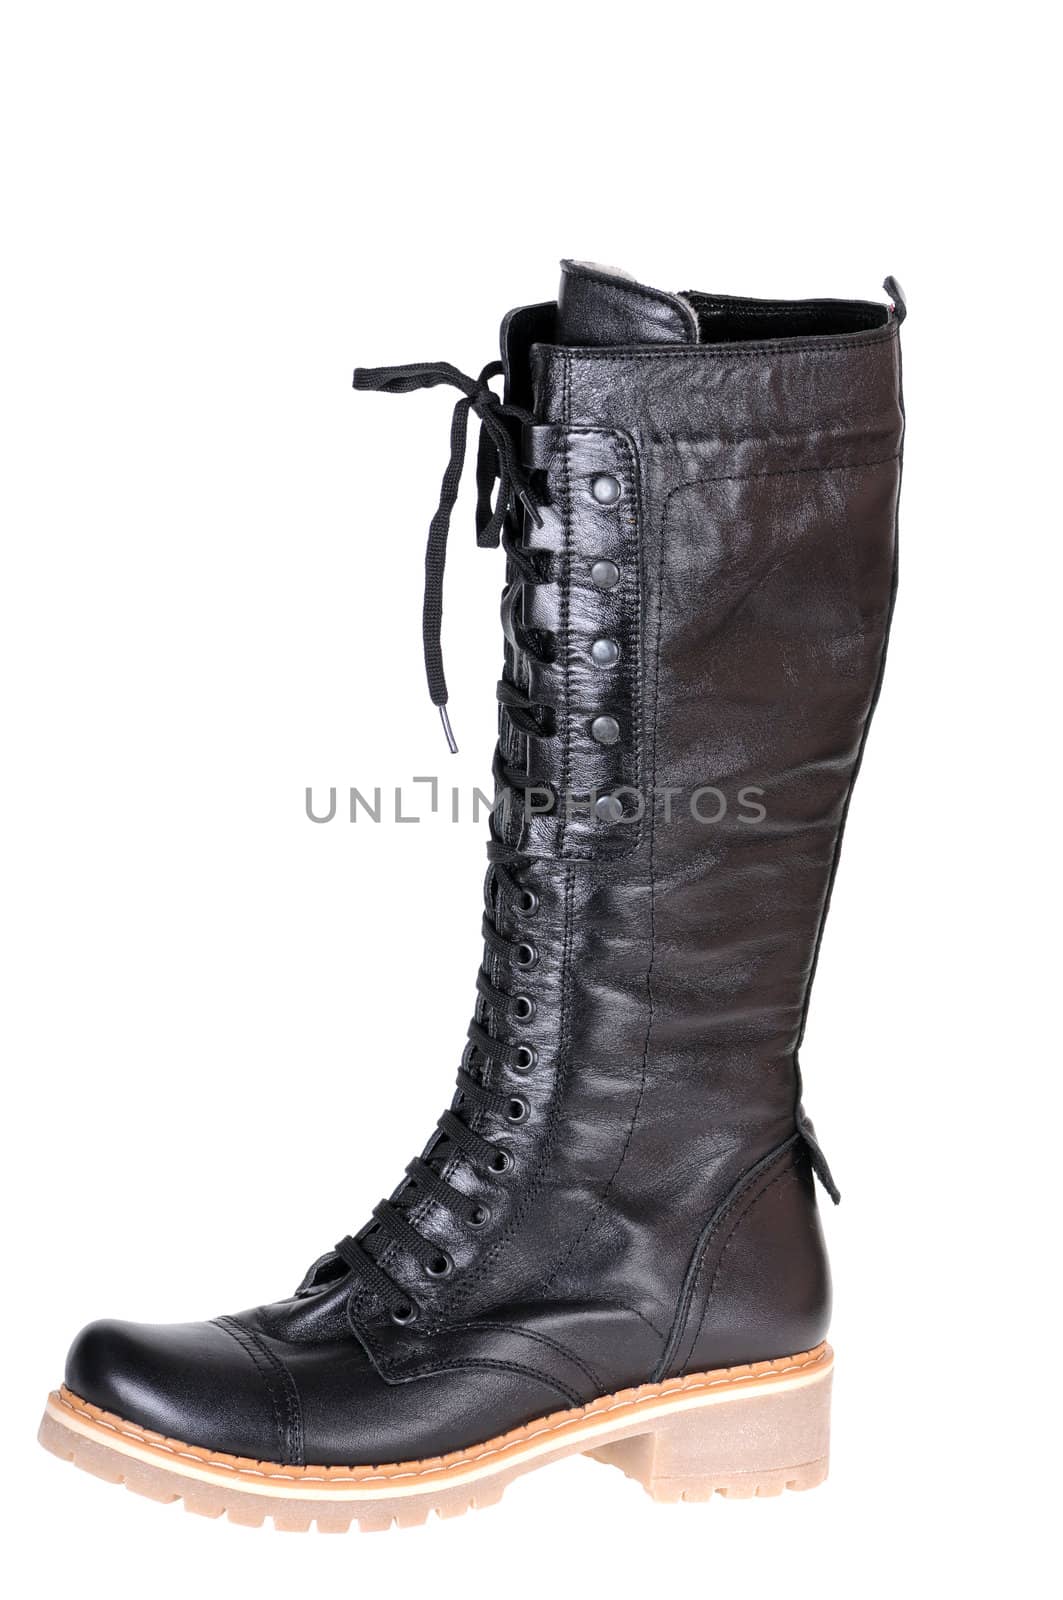 female boot by uriy2007